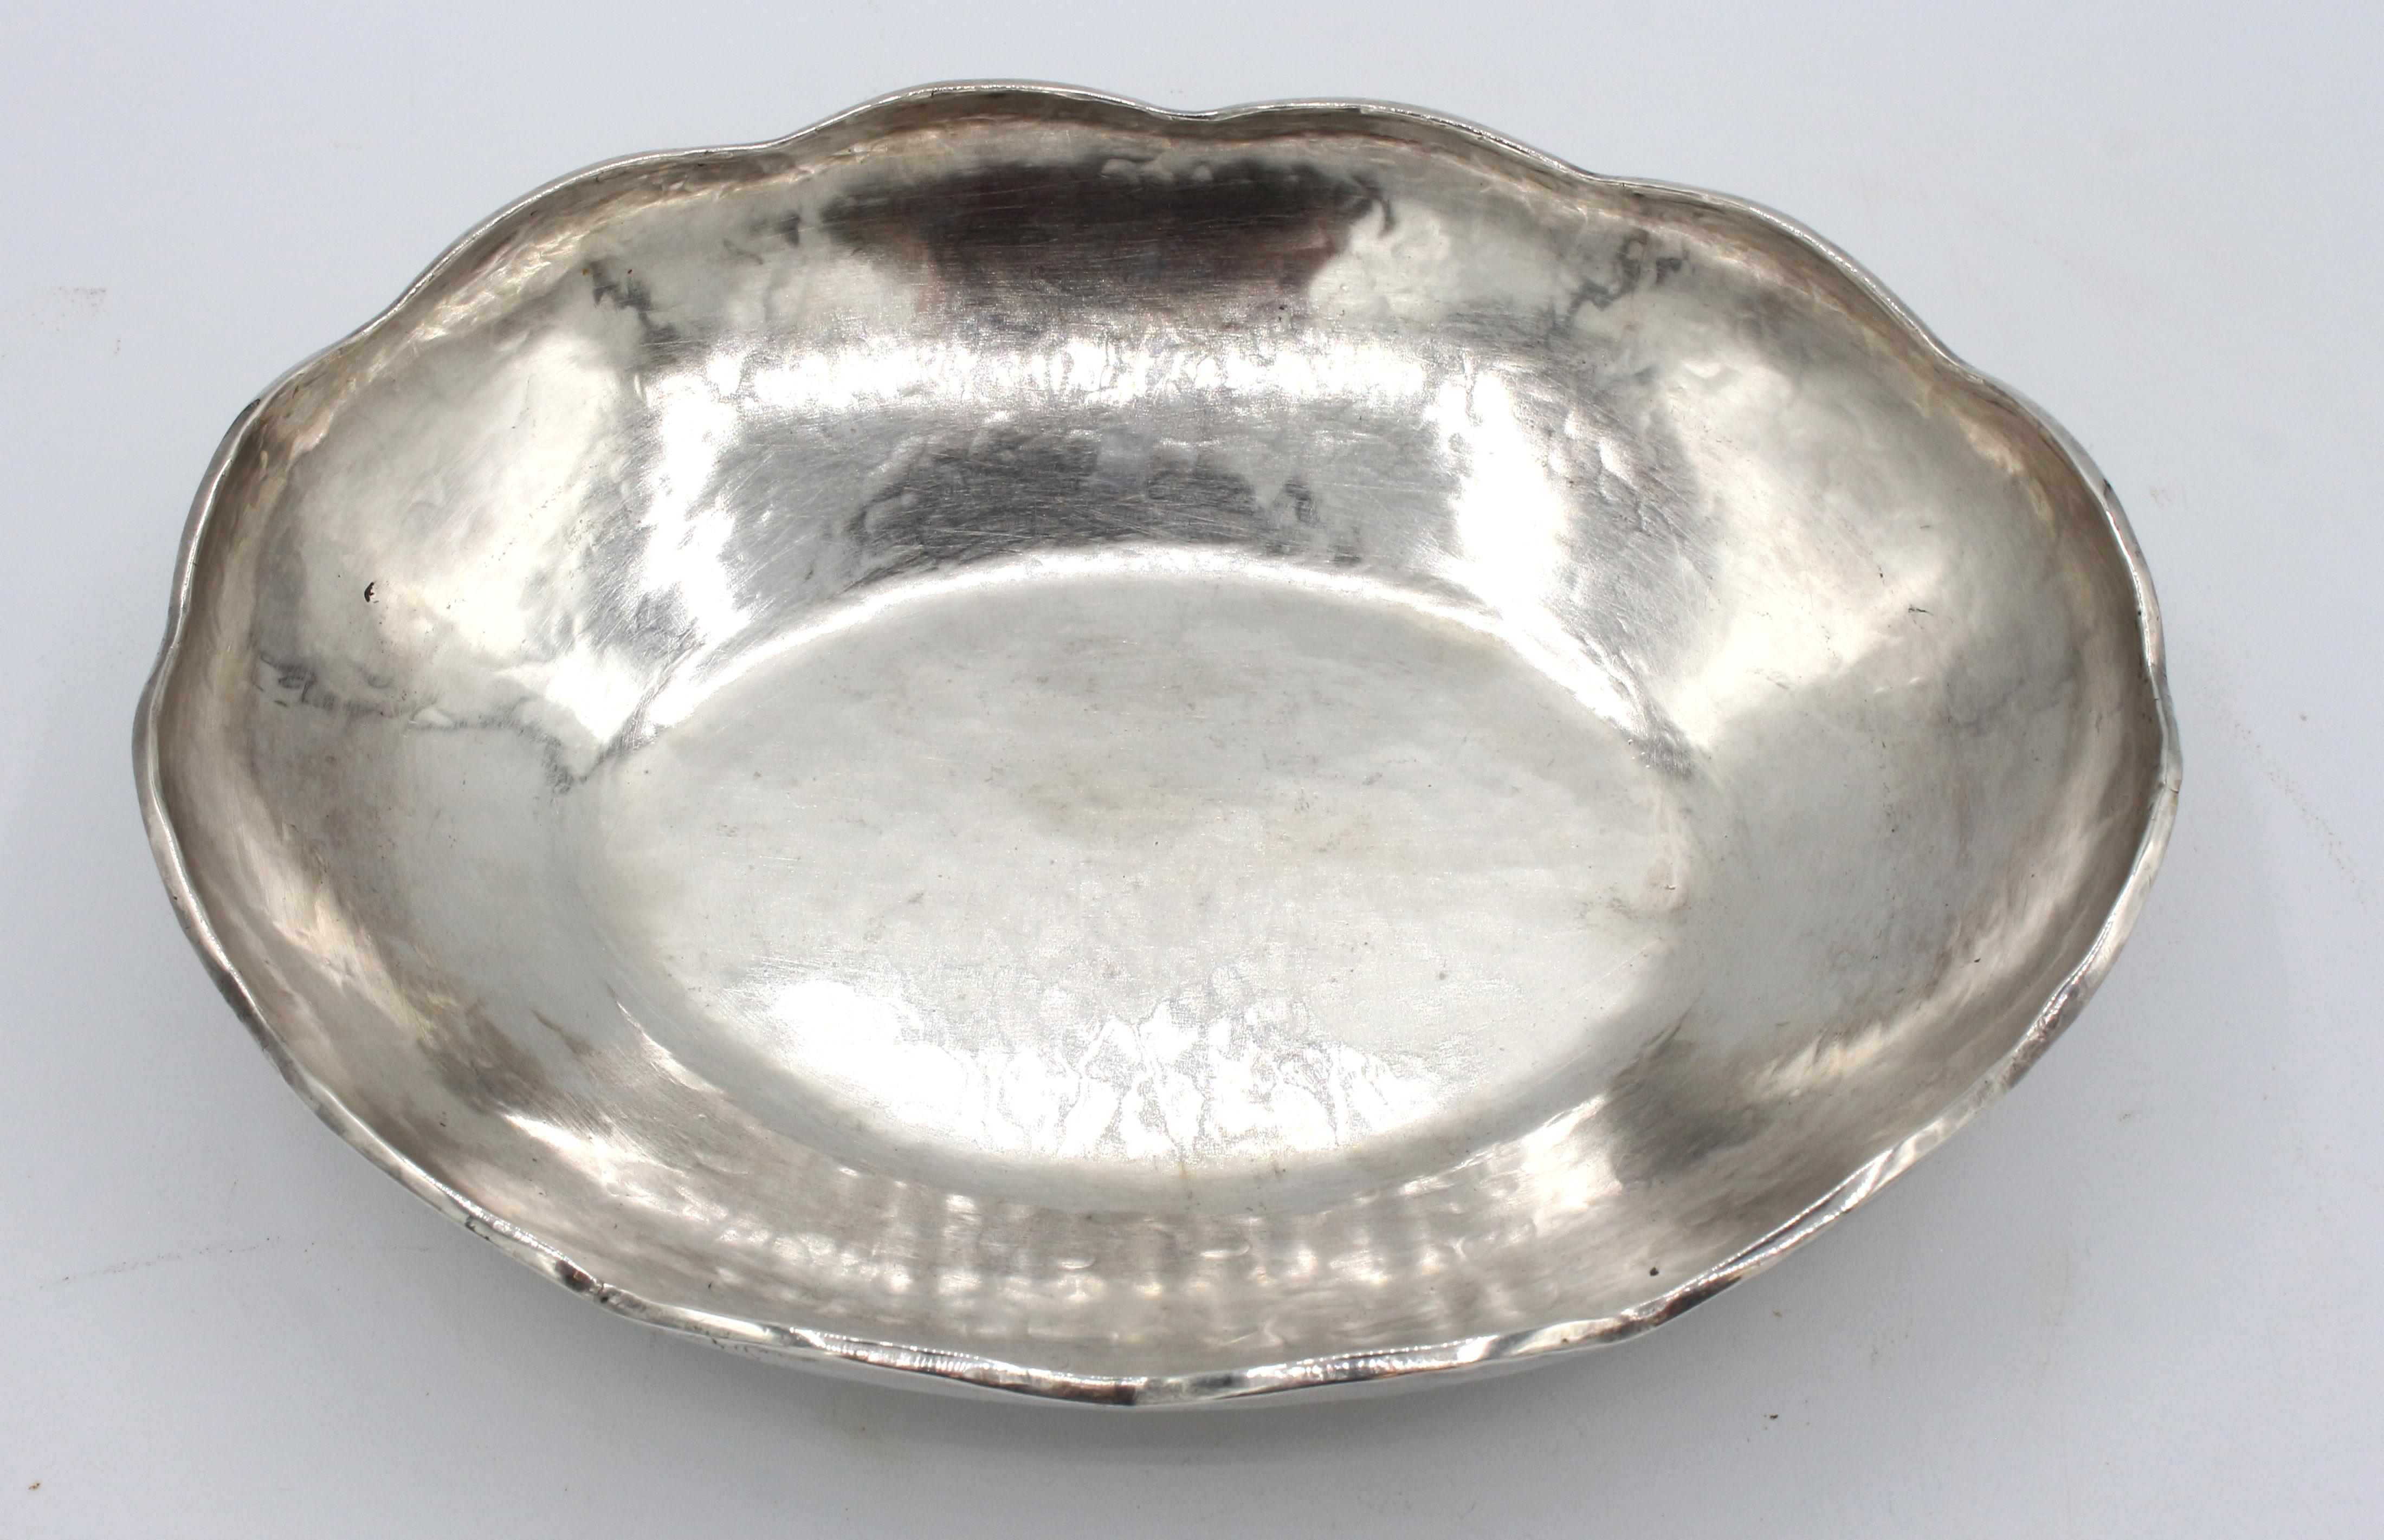 Hammered sterling silver oval lobed bowl, Peru, Welsch Amano silversmiths, c.1960-70s. Fully hallmarked. 19.05 troy oz.
9 3/8